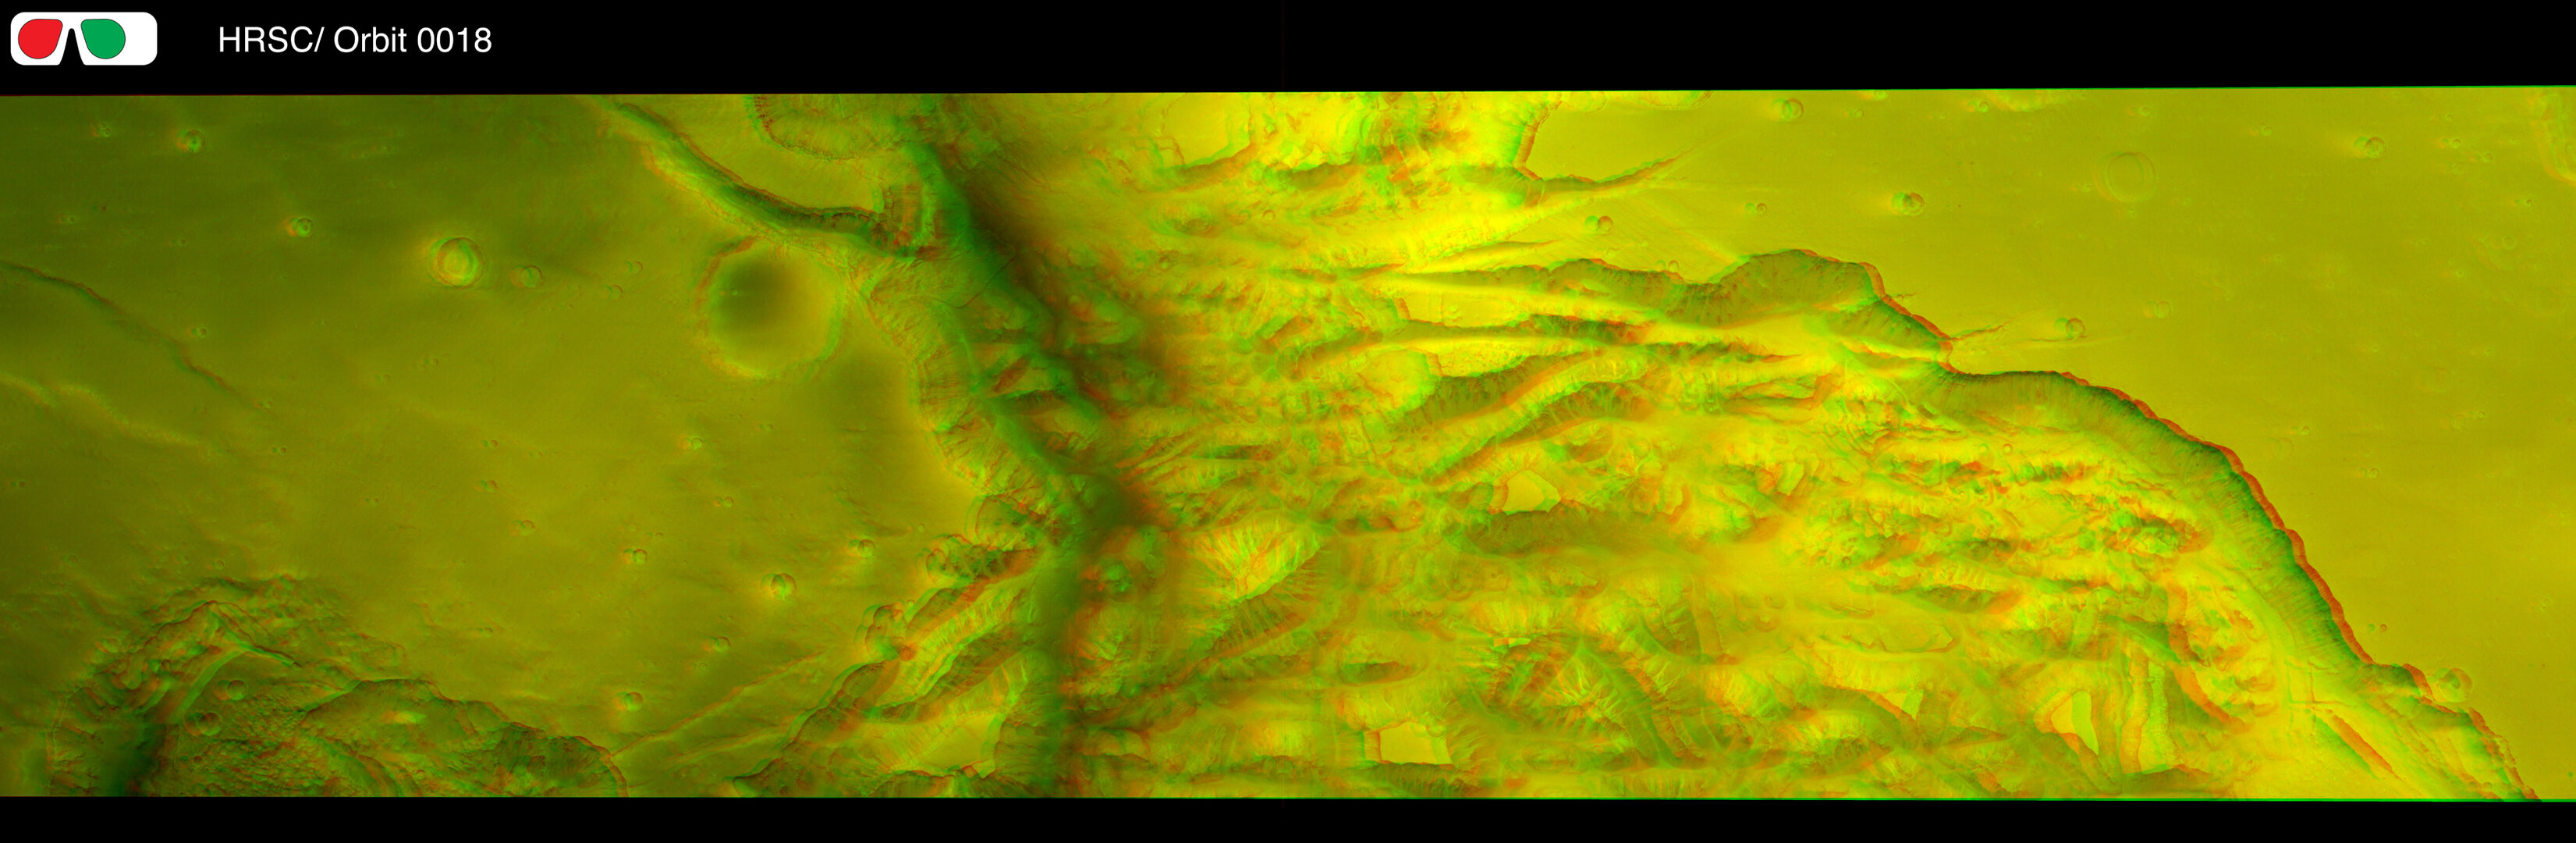 3D HRSC image, Martian equator